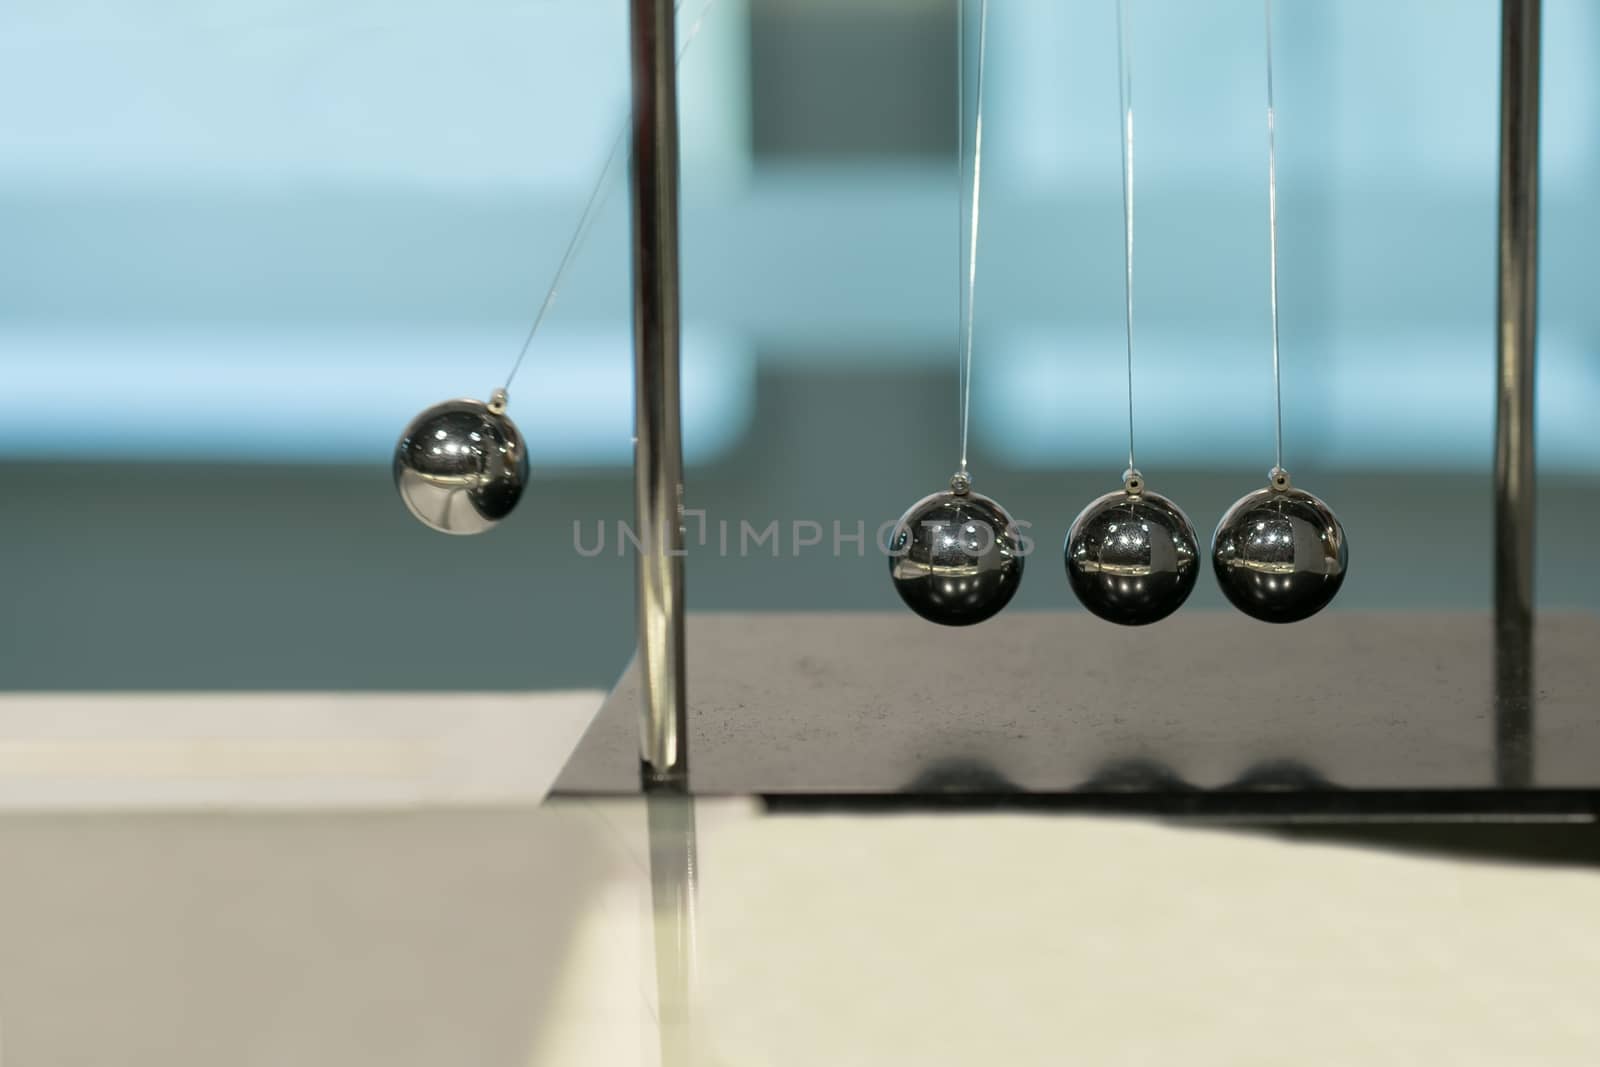 Balancing Balls Newton's Cradle on blurred backgrounds